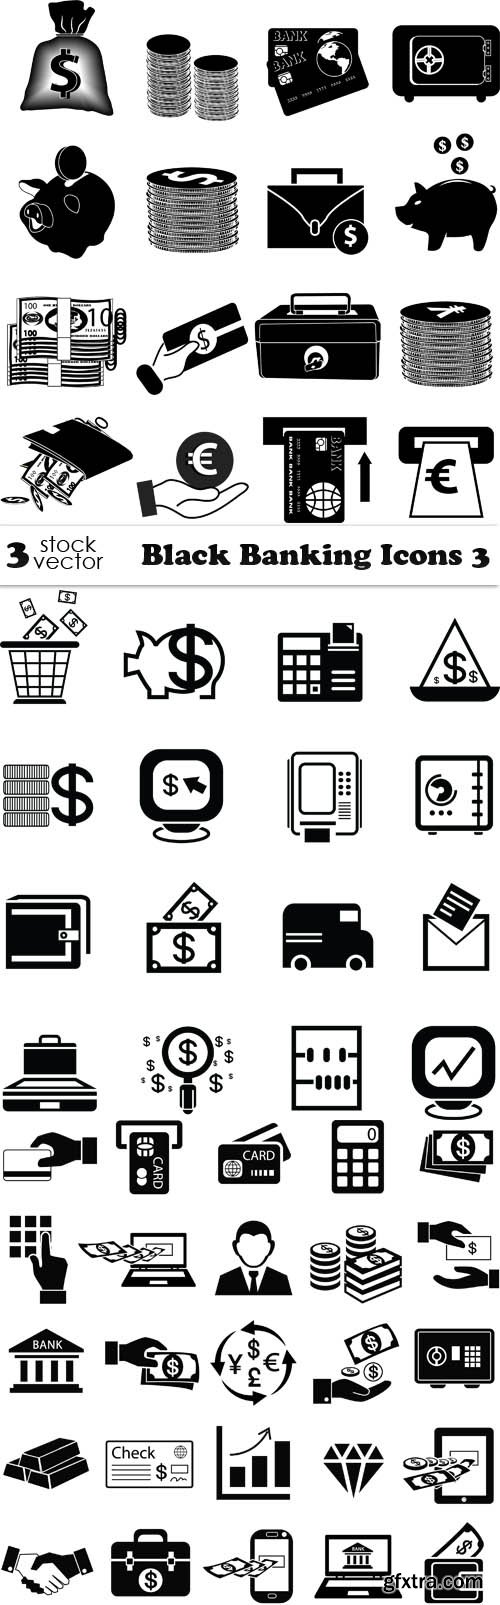 Vectors - Black Banking Icons 3